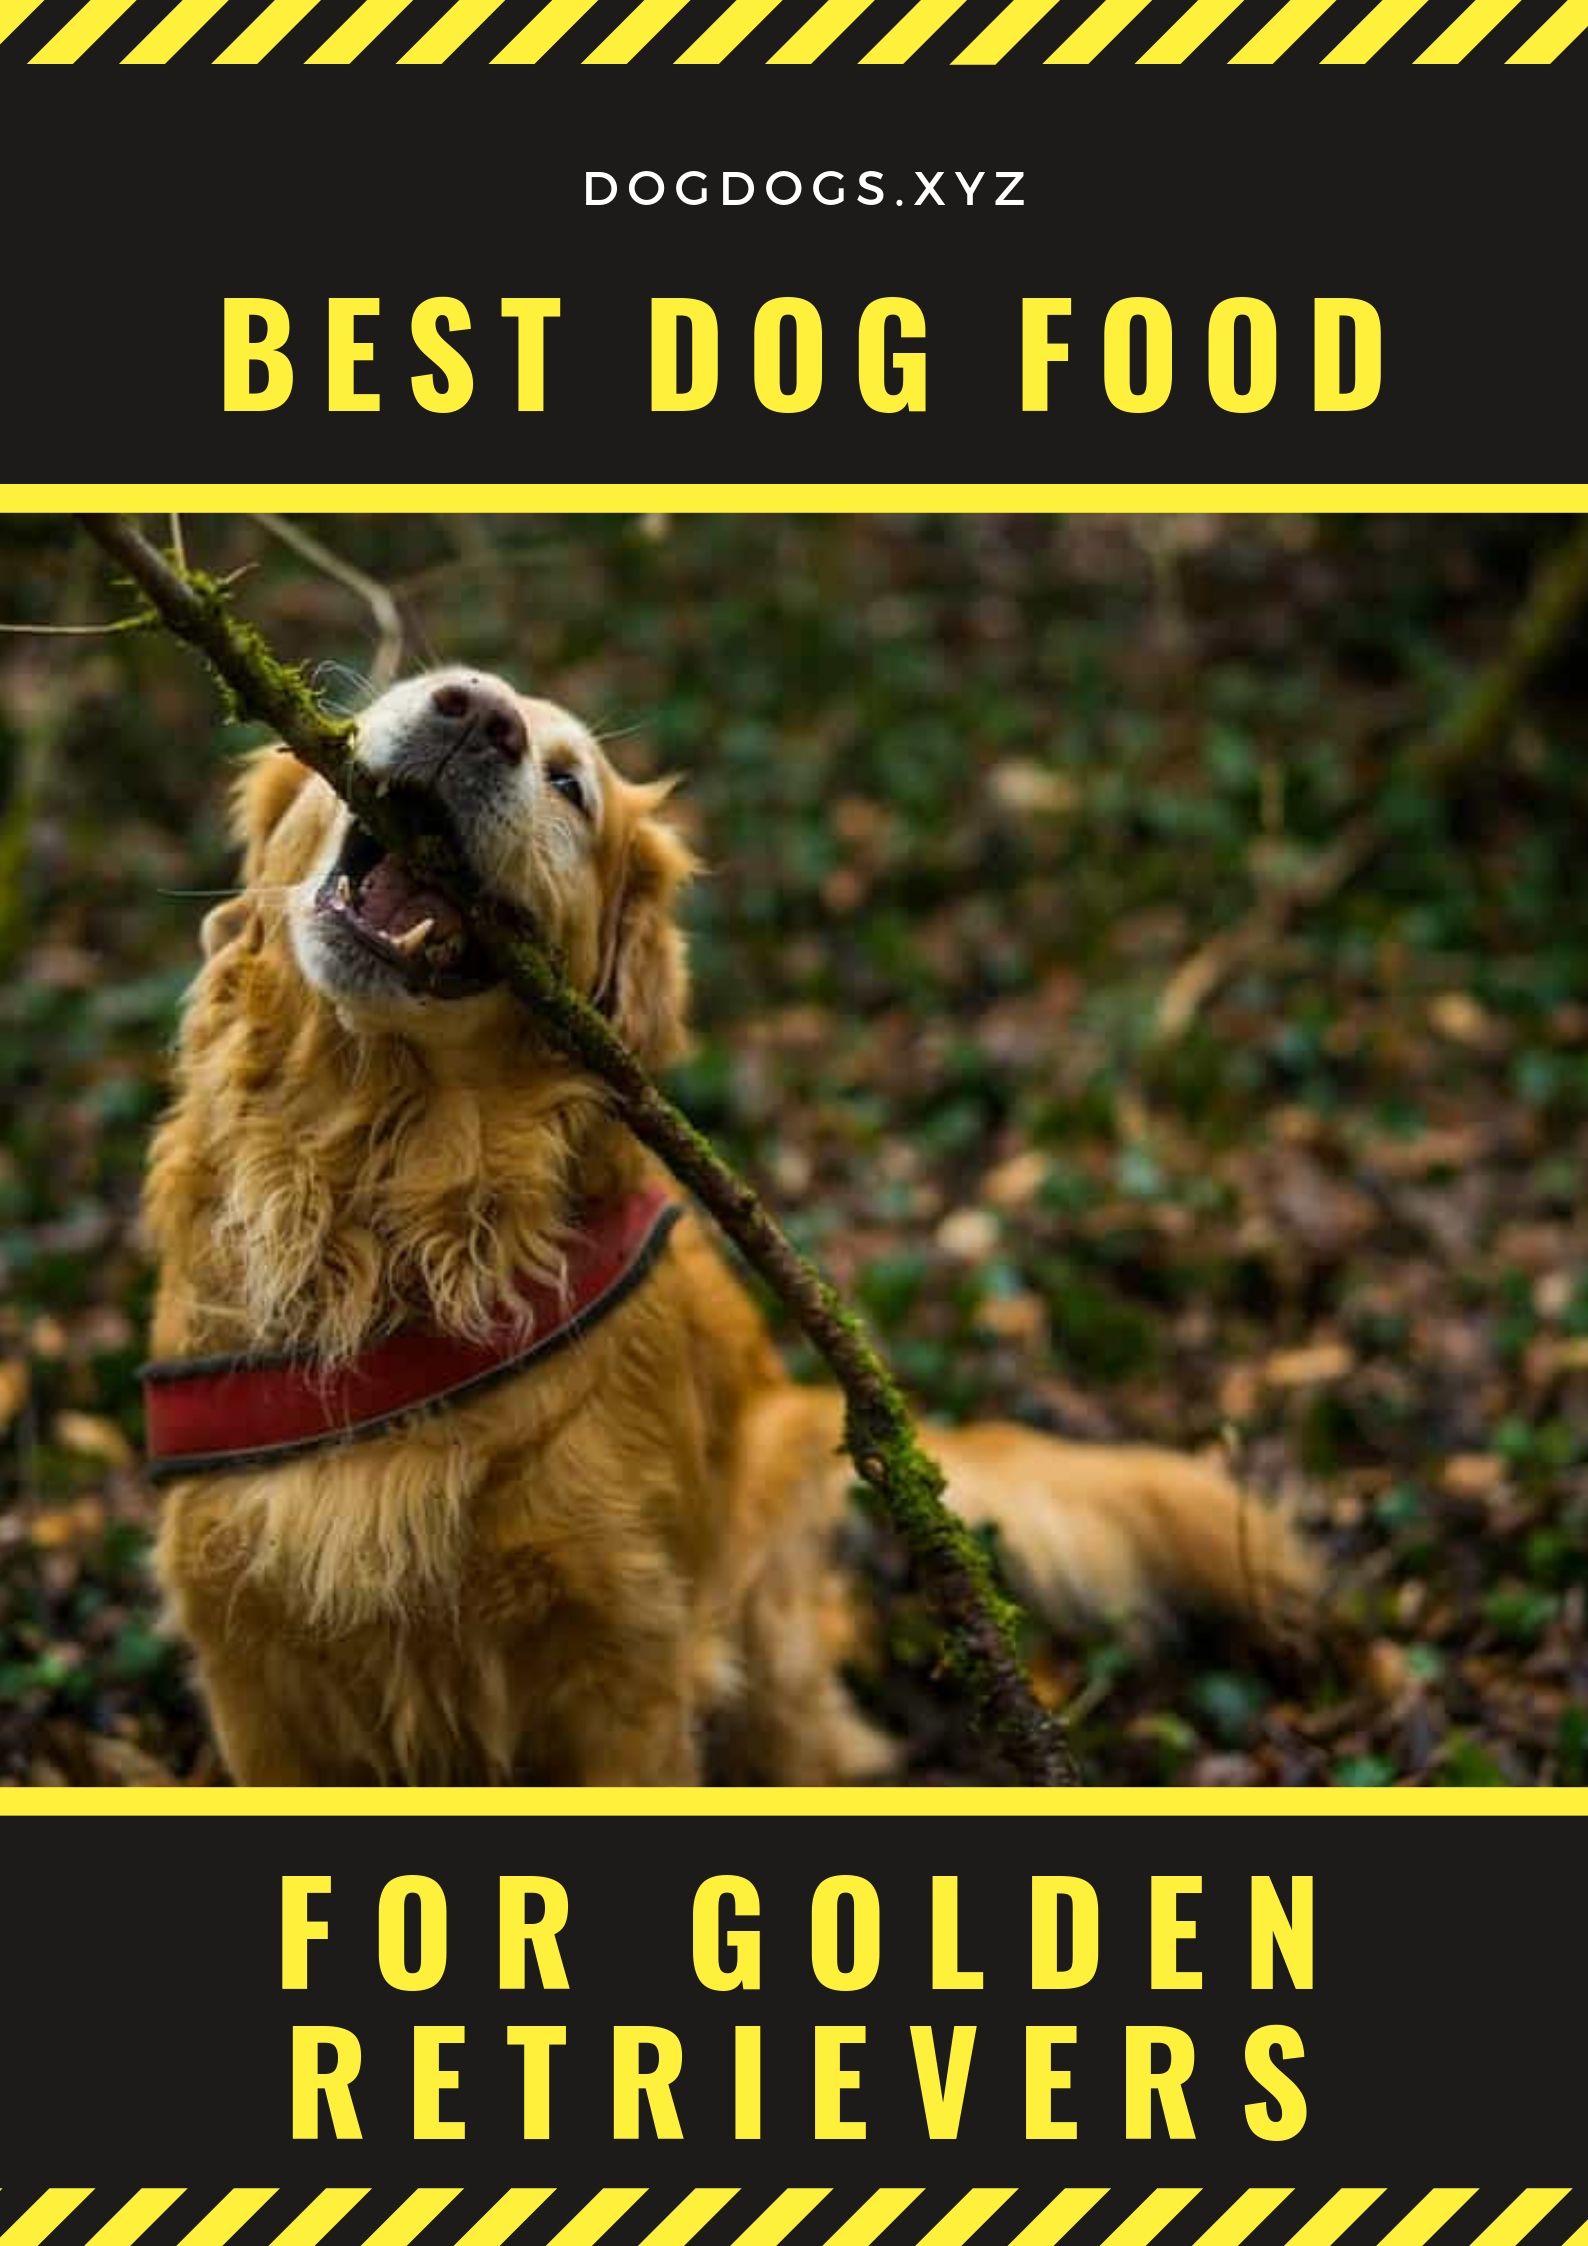 Best Dog Food For Golden Retrievers  Dogdogs